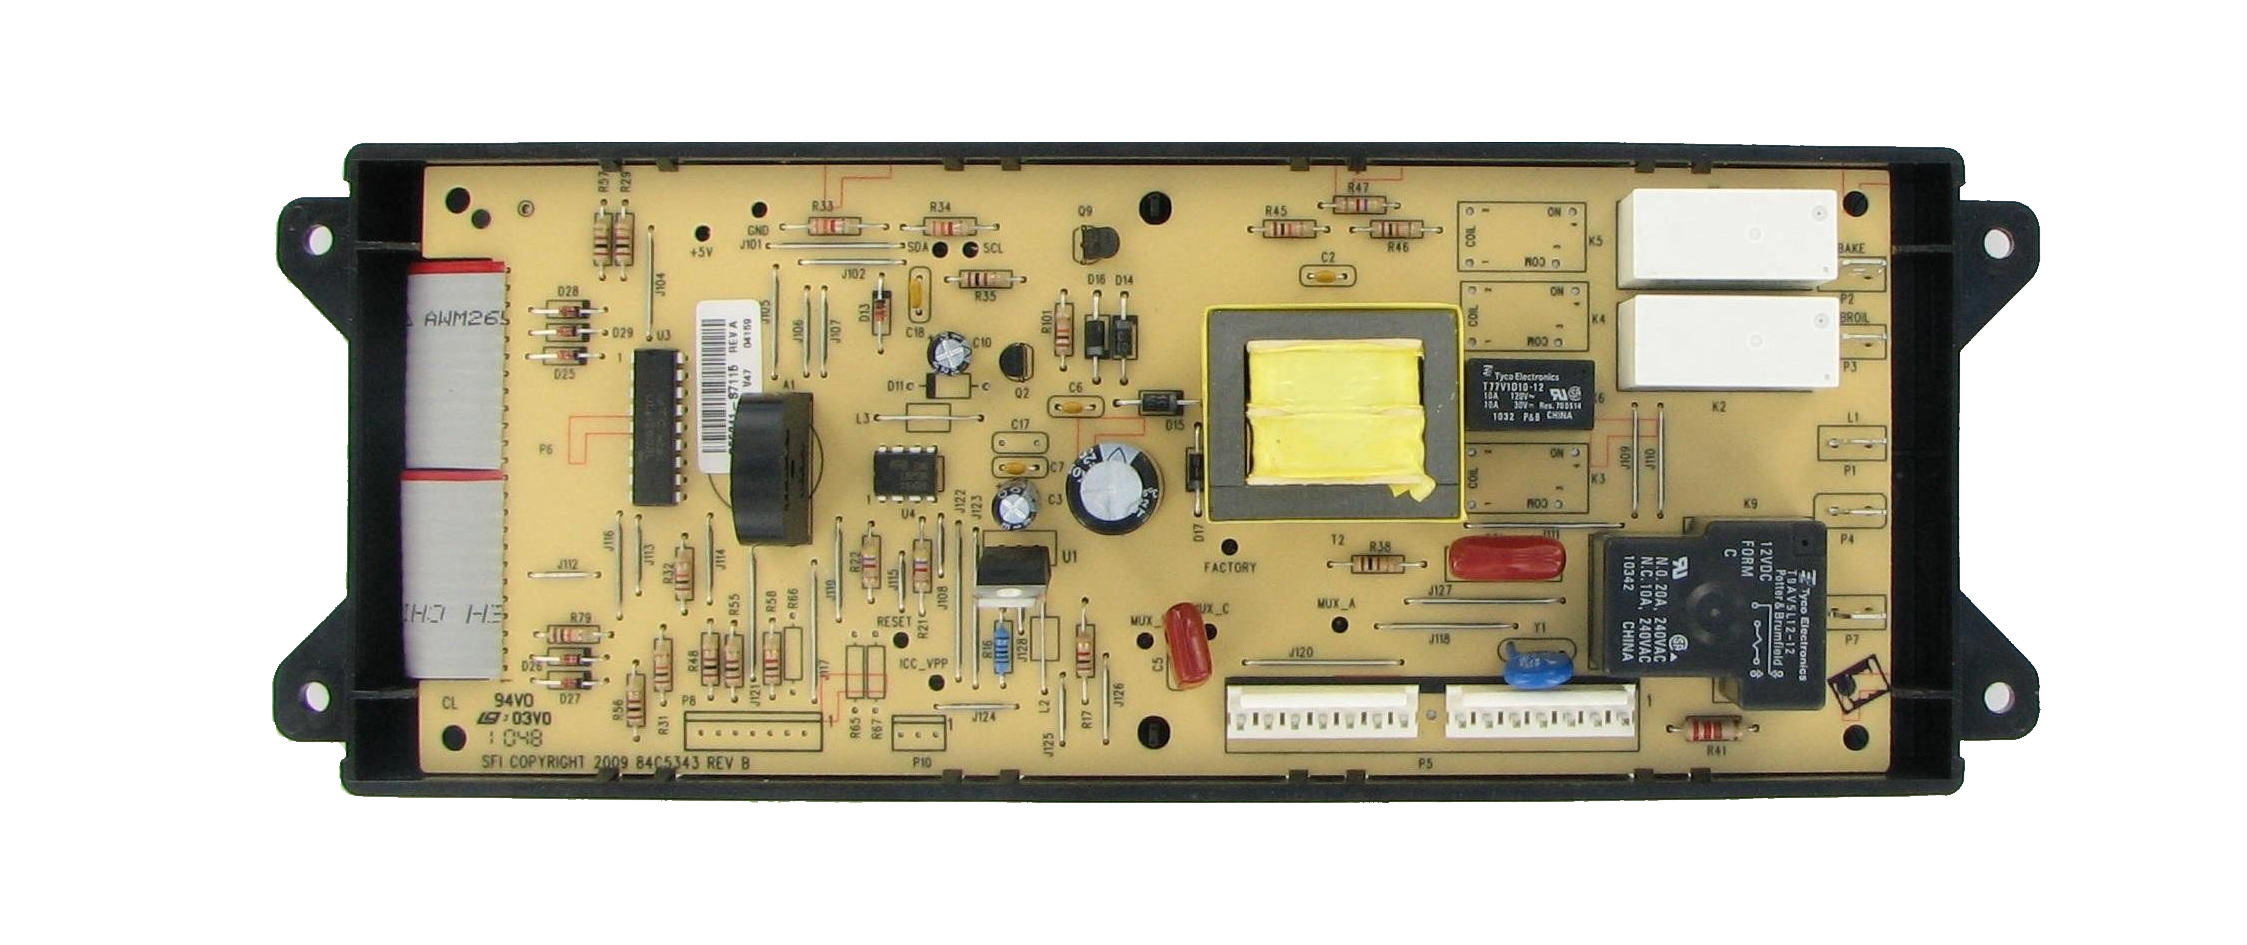 Range Control Board 316557115 Repair Service For Frigidaire Oven 